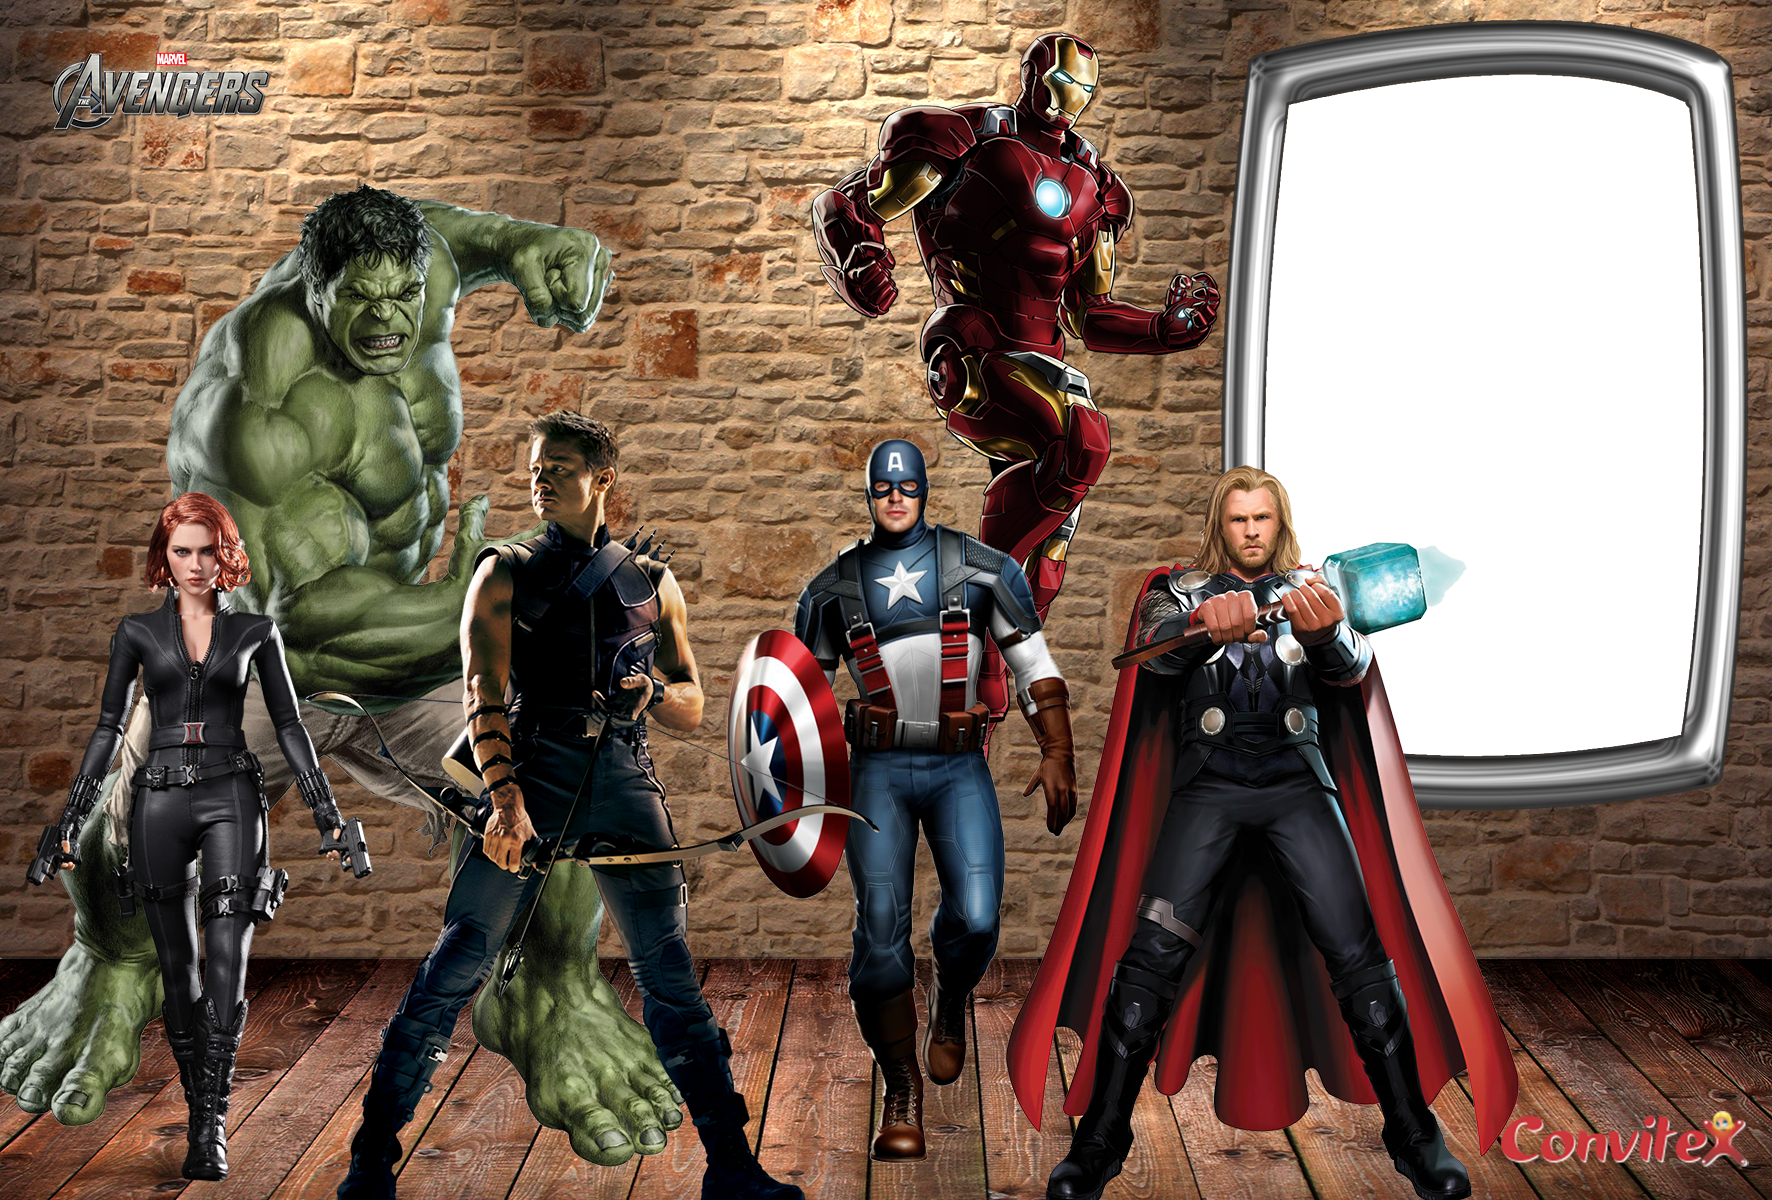 Giz Images: Avengers, post 12